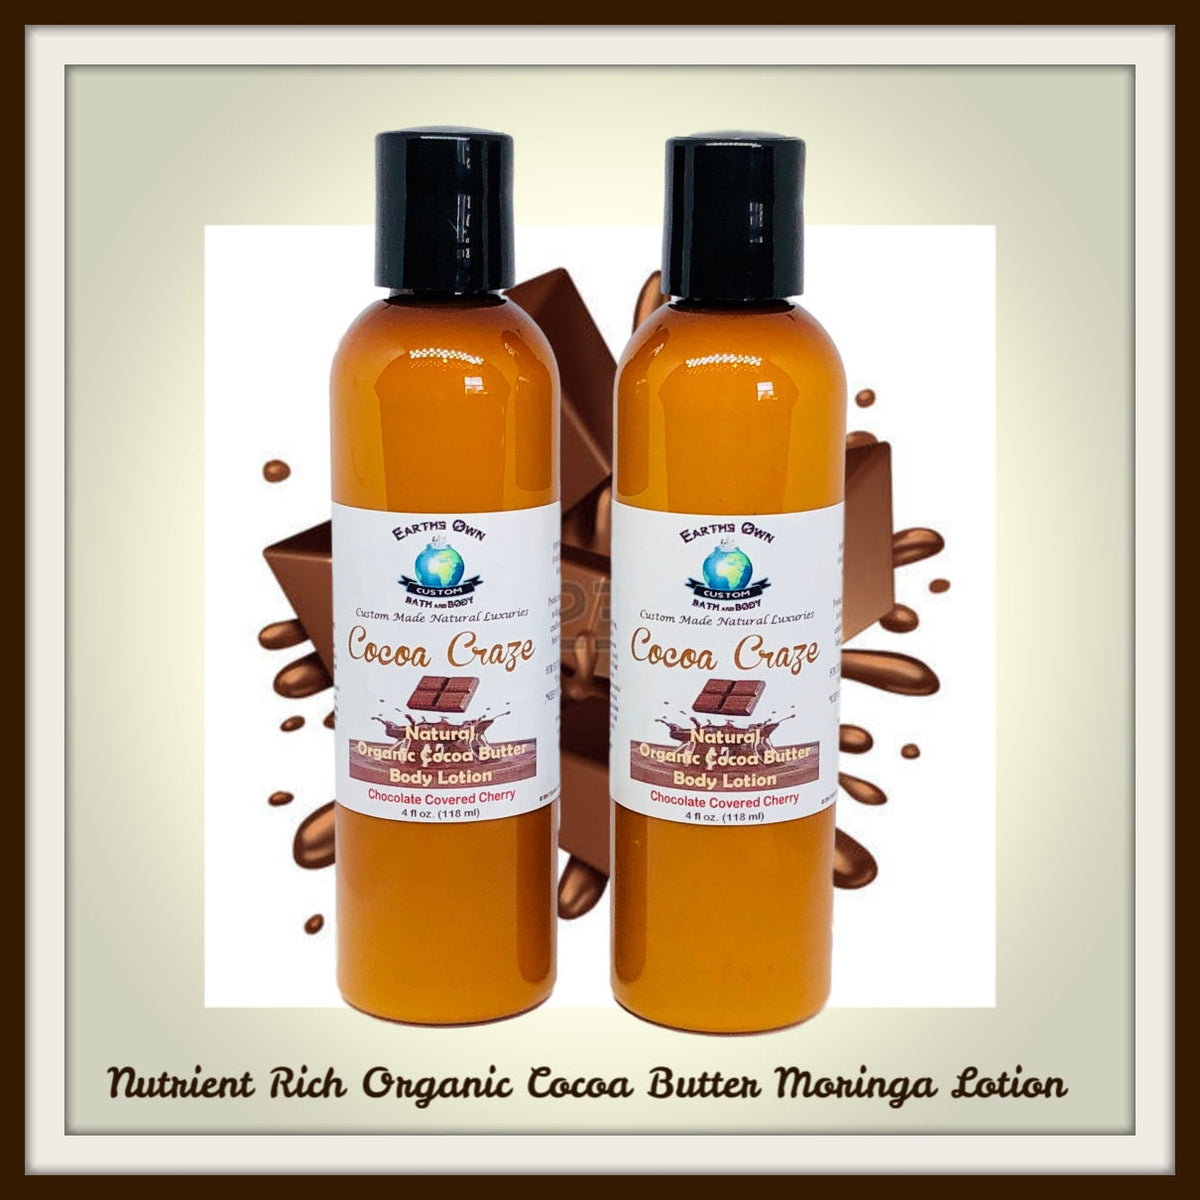 Rusten Intervenere sløring 8 oz Cocoa Craze Organic Cocoa Butter & Moringa Body Lotion | PEG Free –  Earth's Own Bath & Body